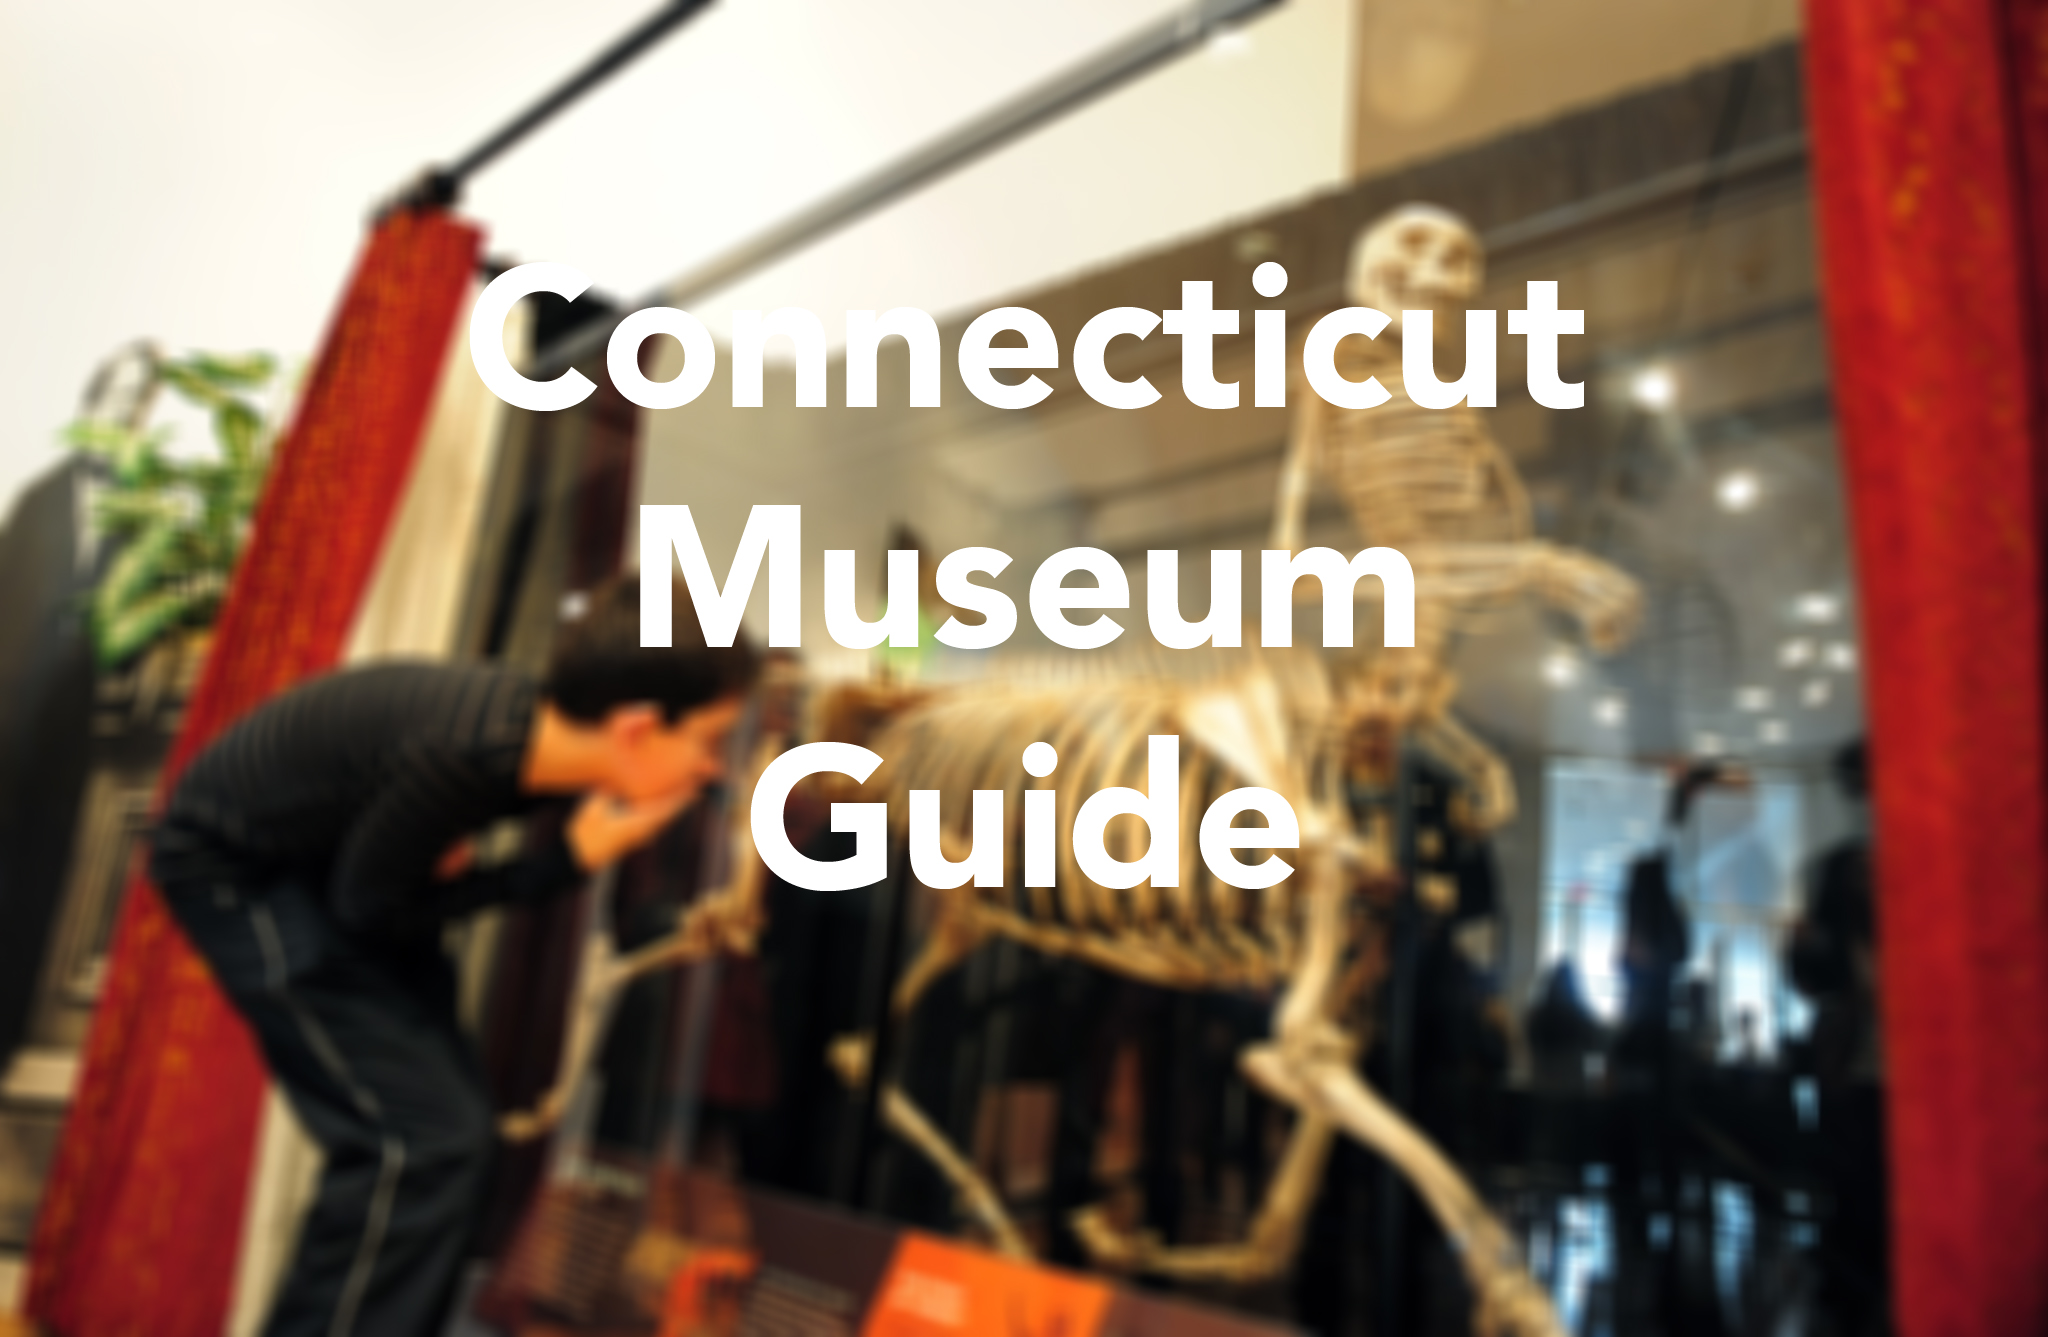 Connecticut museum guide